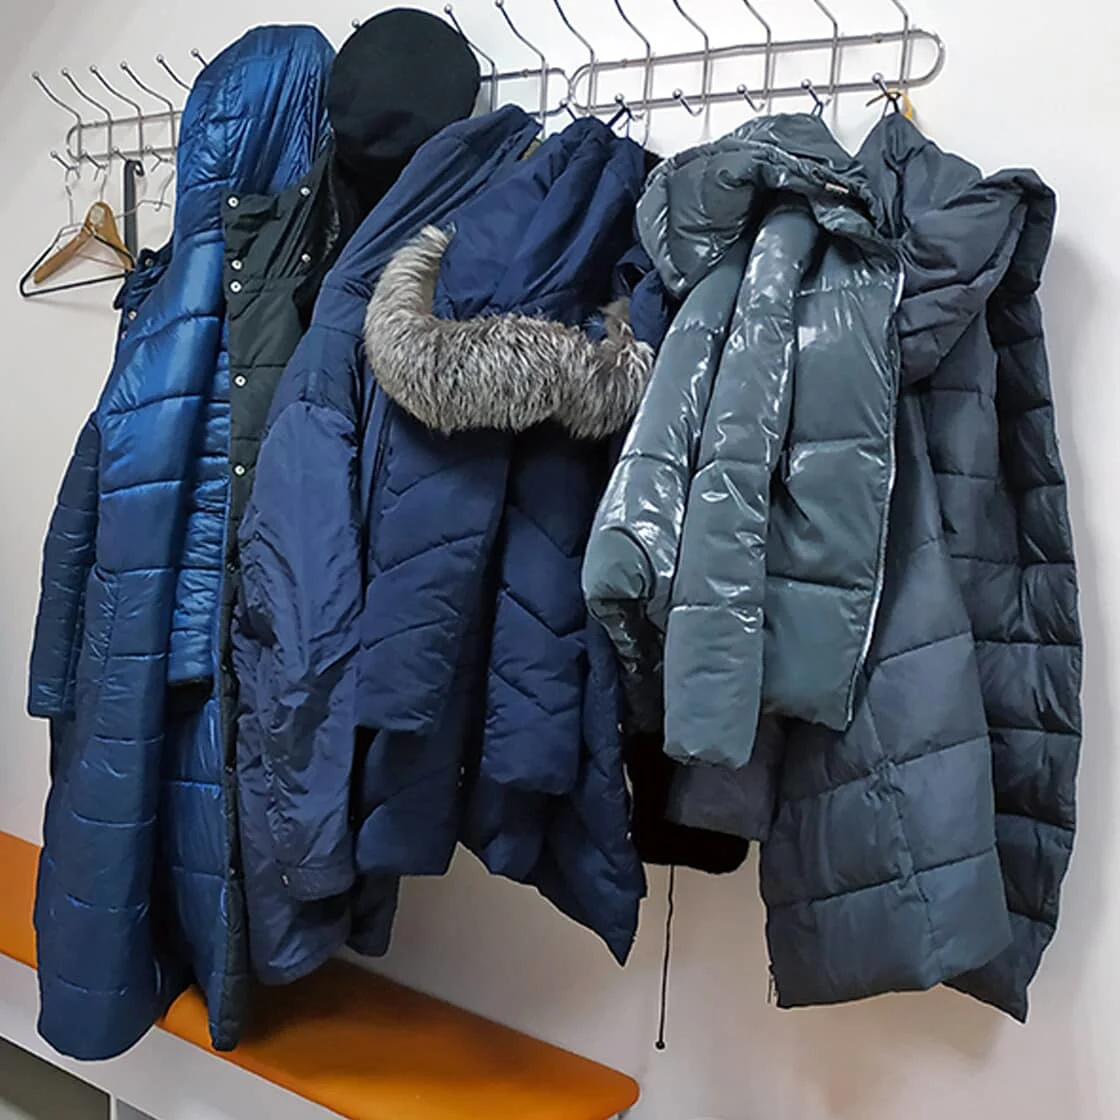 Winter coats hung up